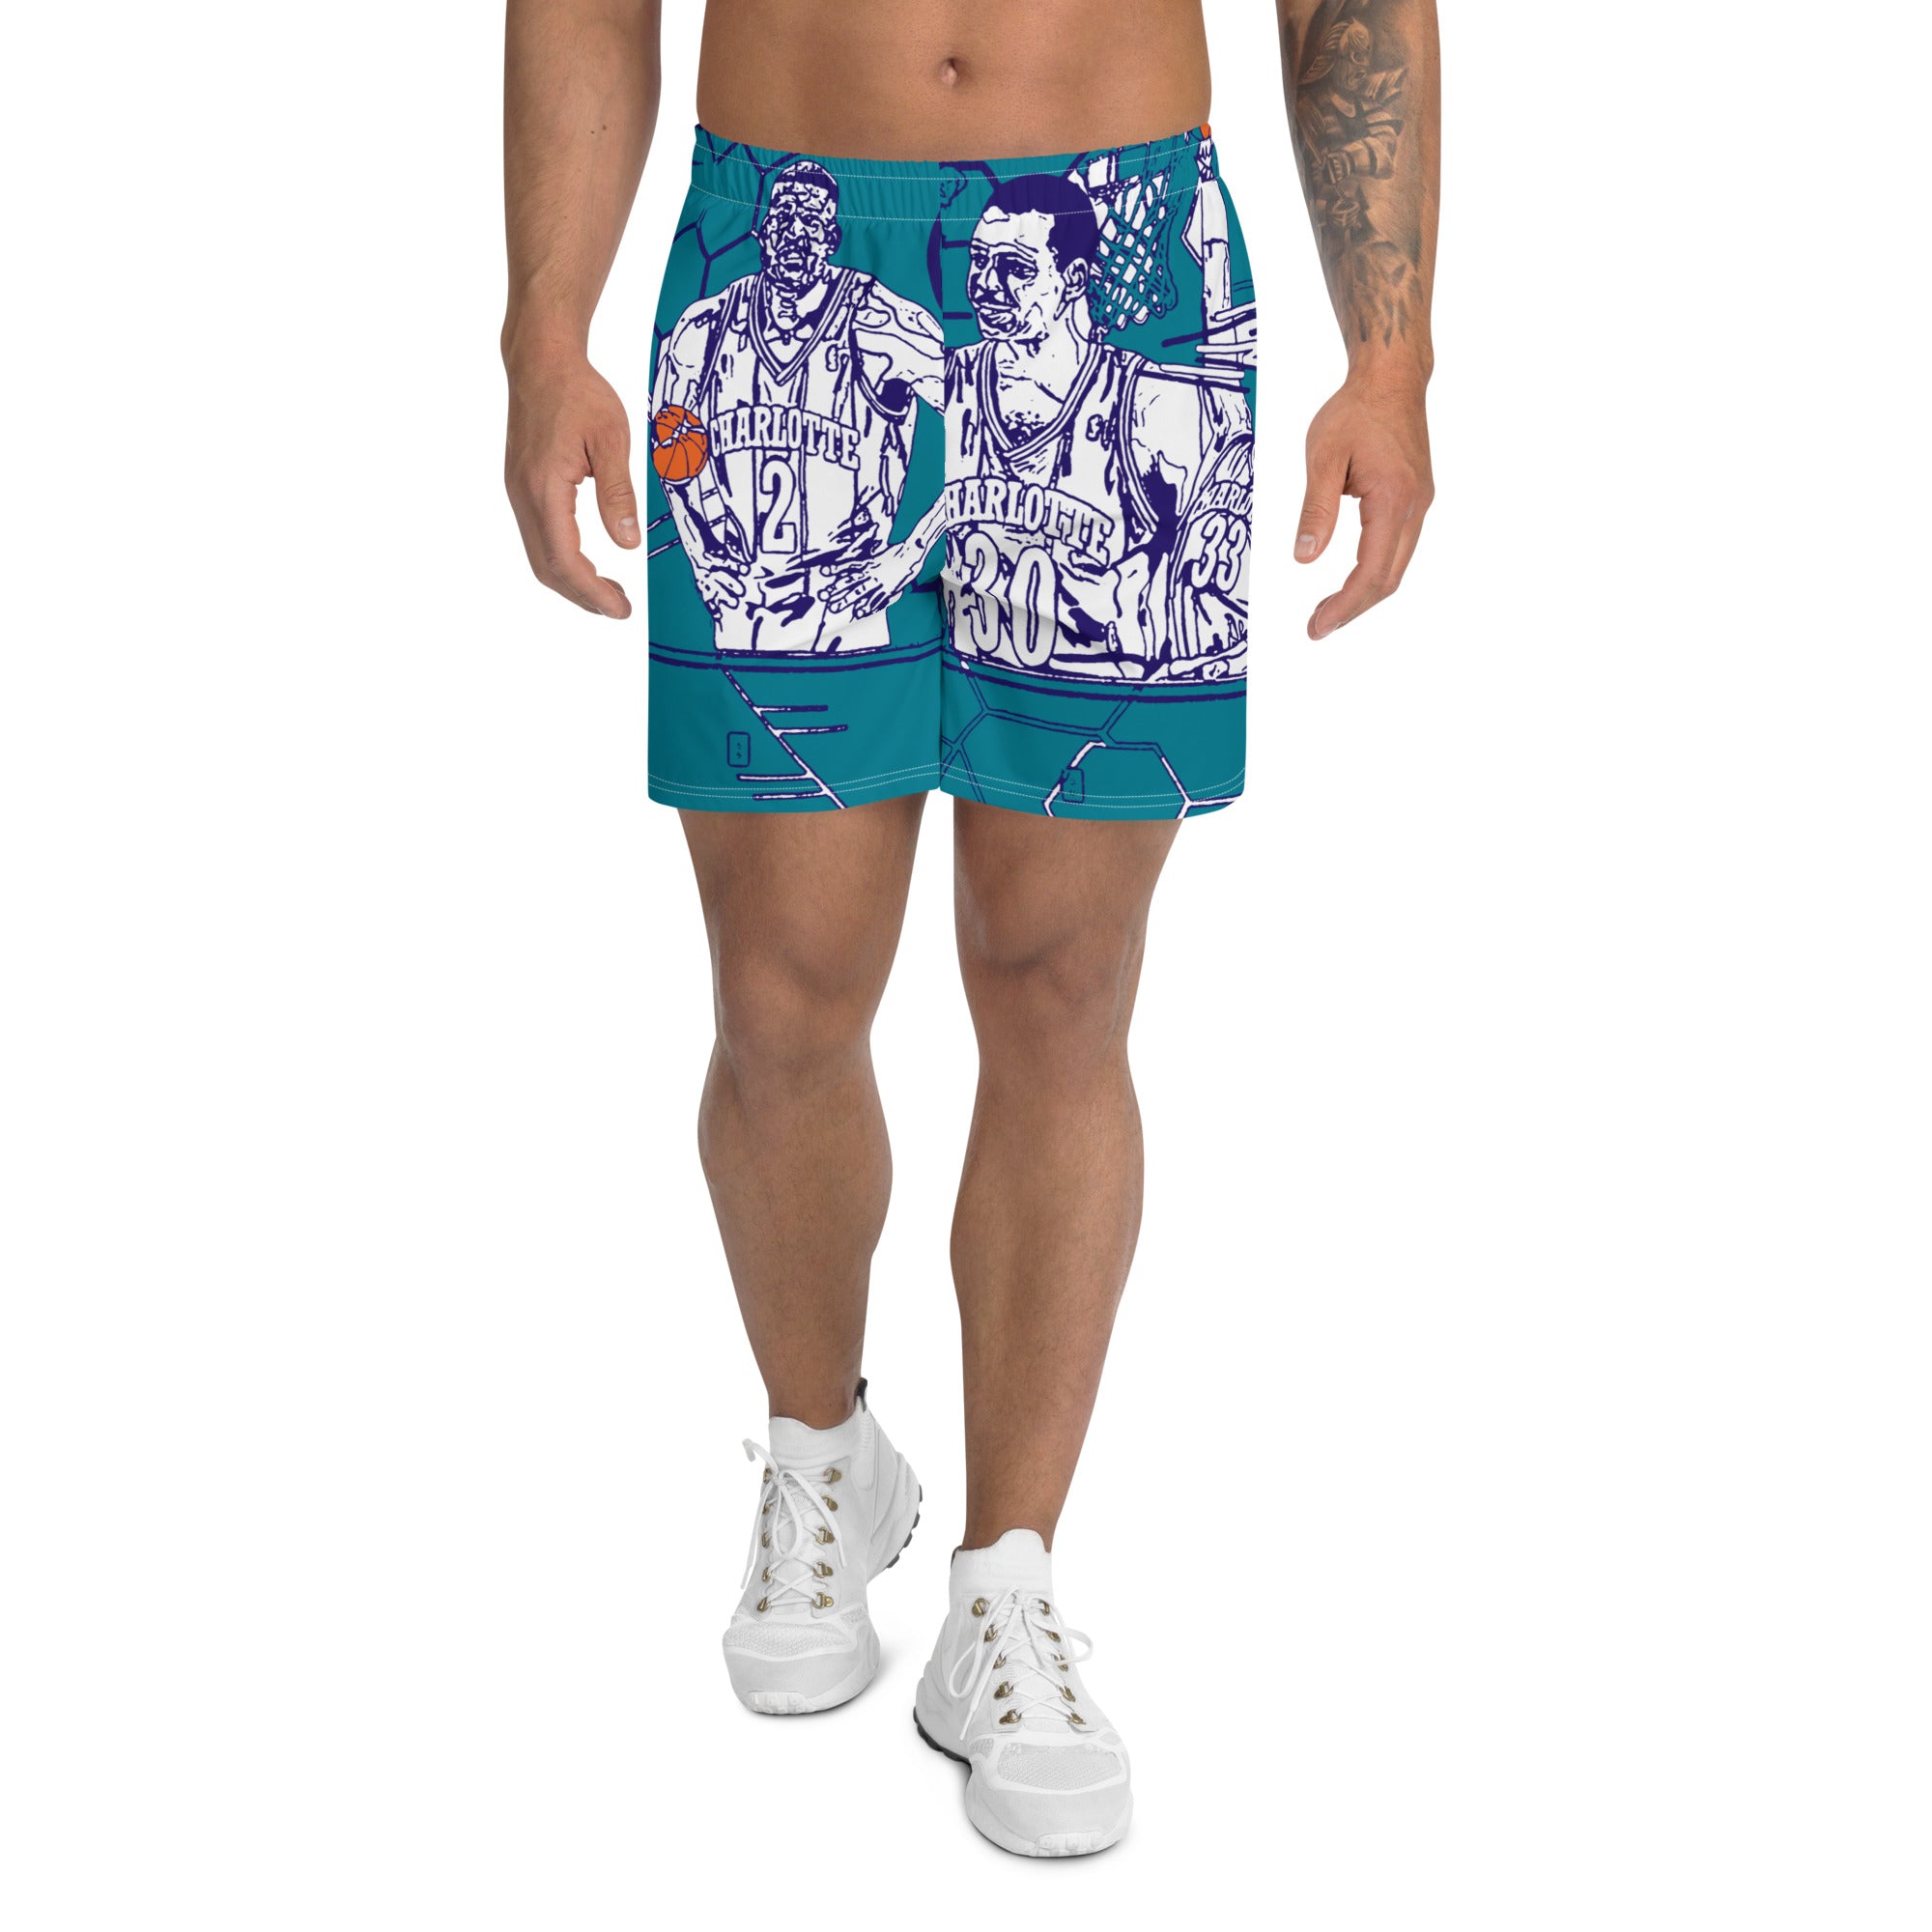 Buzz City Athletic Long Shorts